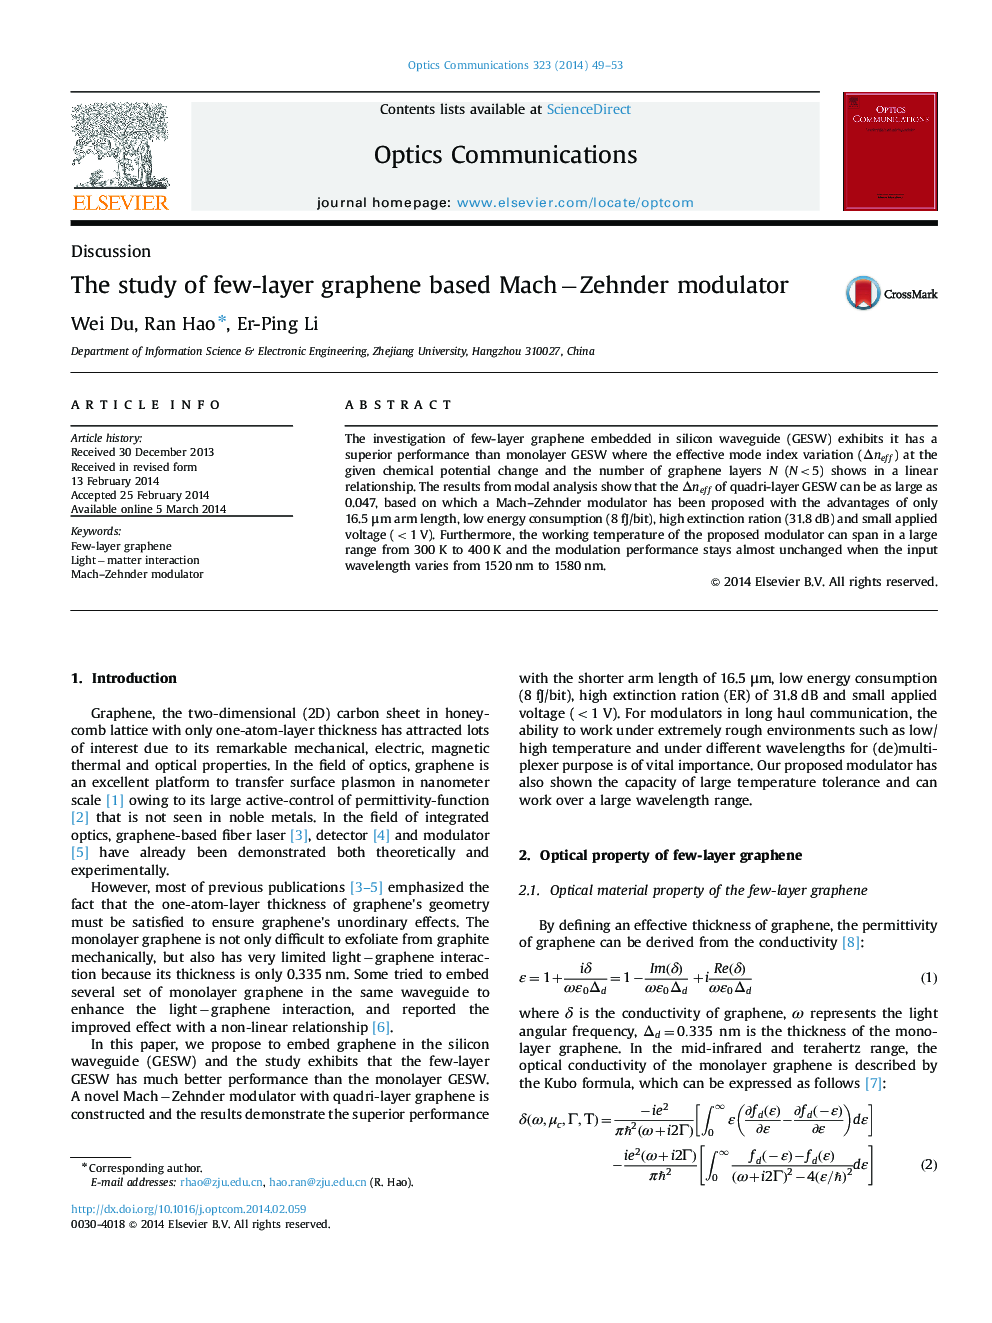 The study of few-layer graphene based Mach−Zehnder modulator